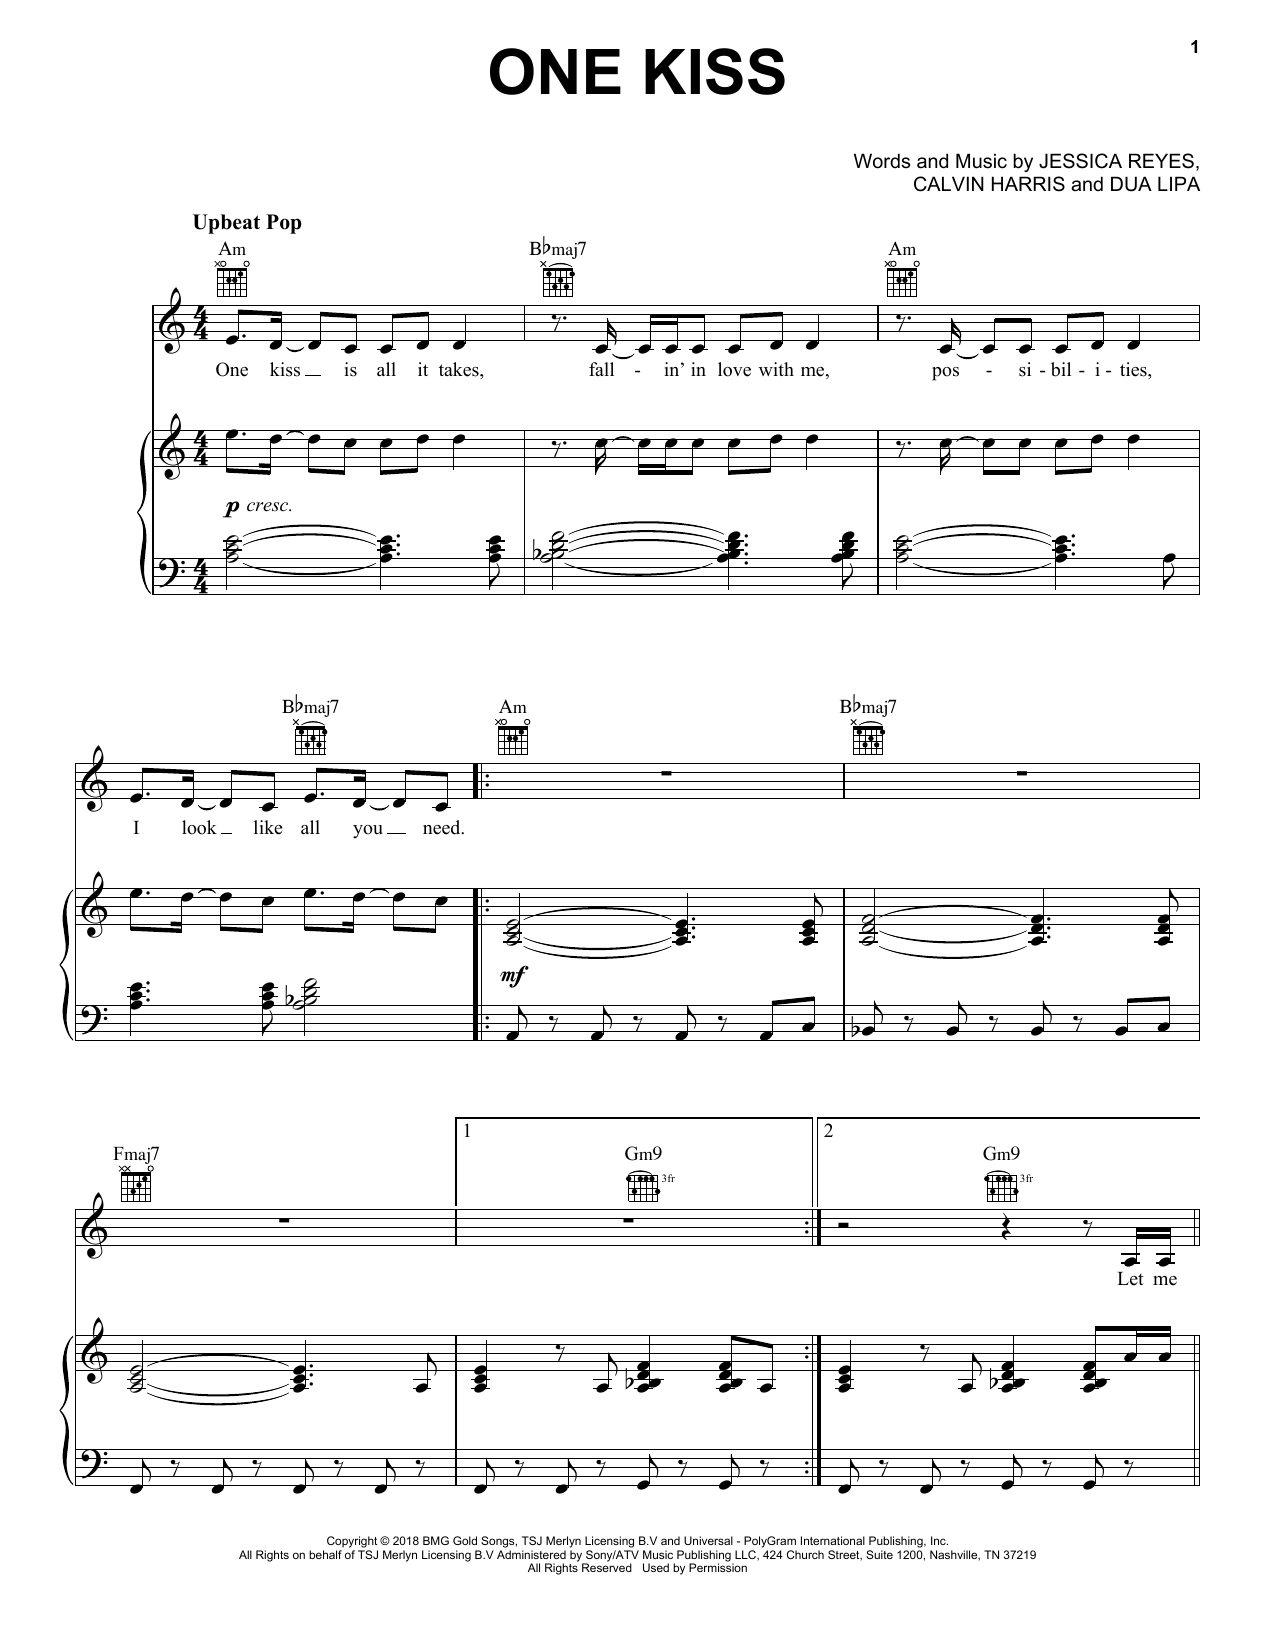 Calvin Harris & Dua Lipa One Kiss sheet music notes and chords arranged for Easy Piano